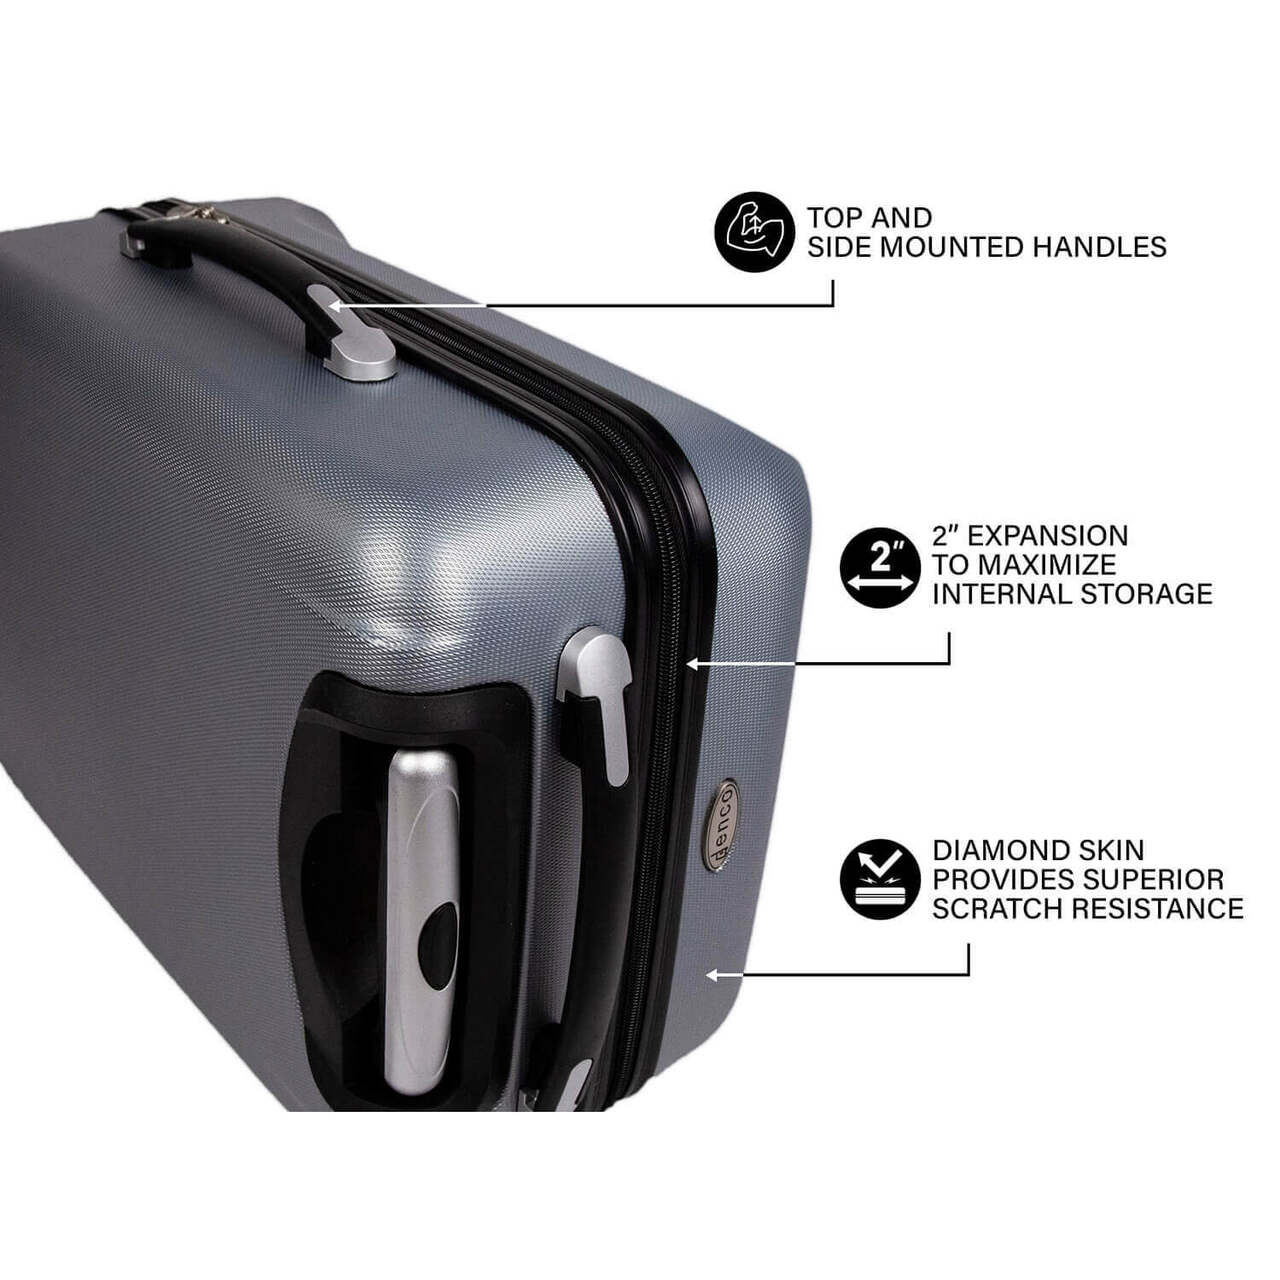 Harvard Crimson 20" Hardcase Luggage Carry-on Spinner